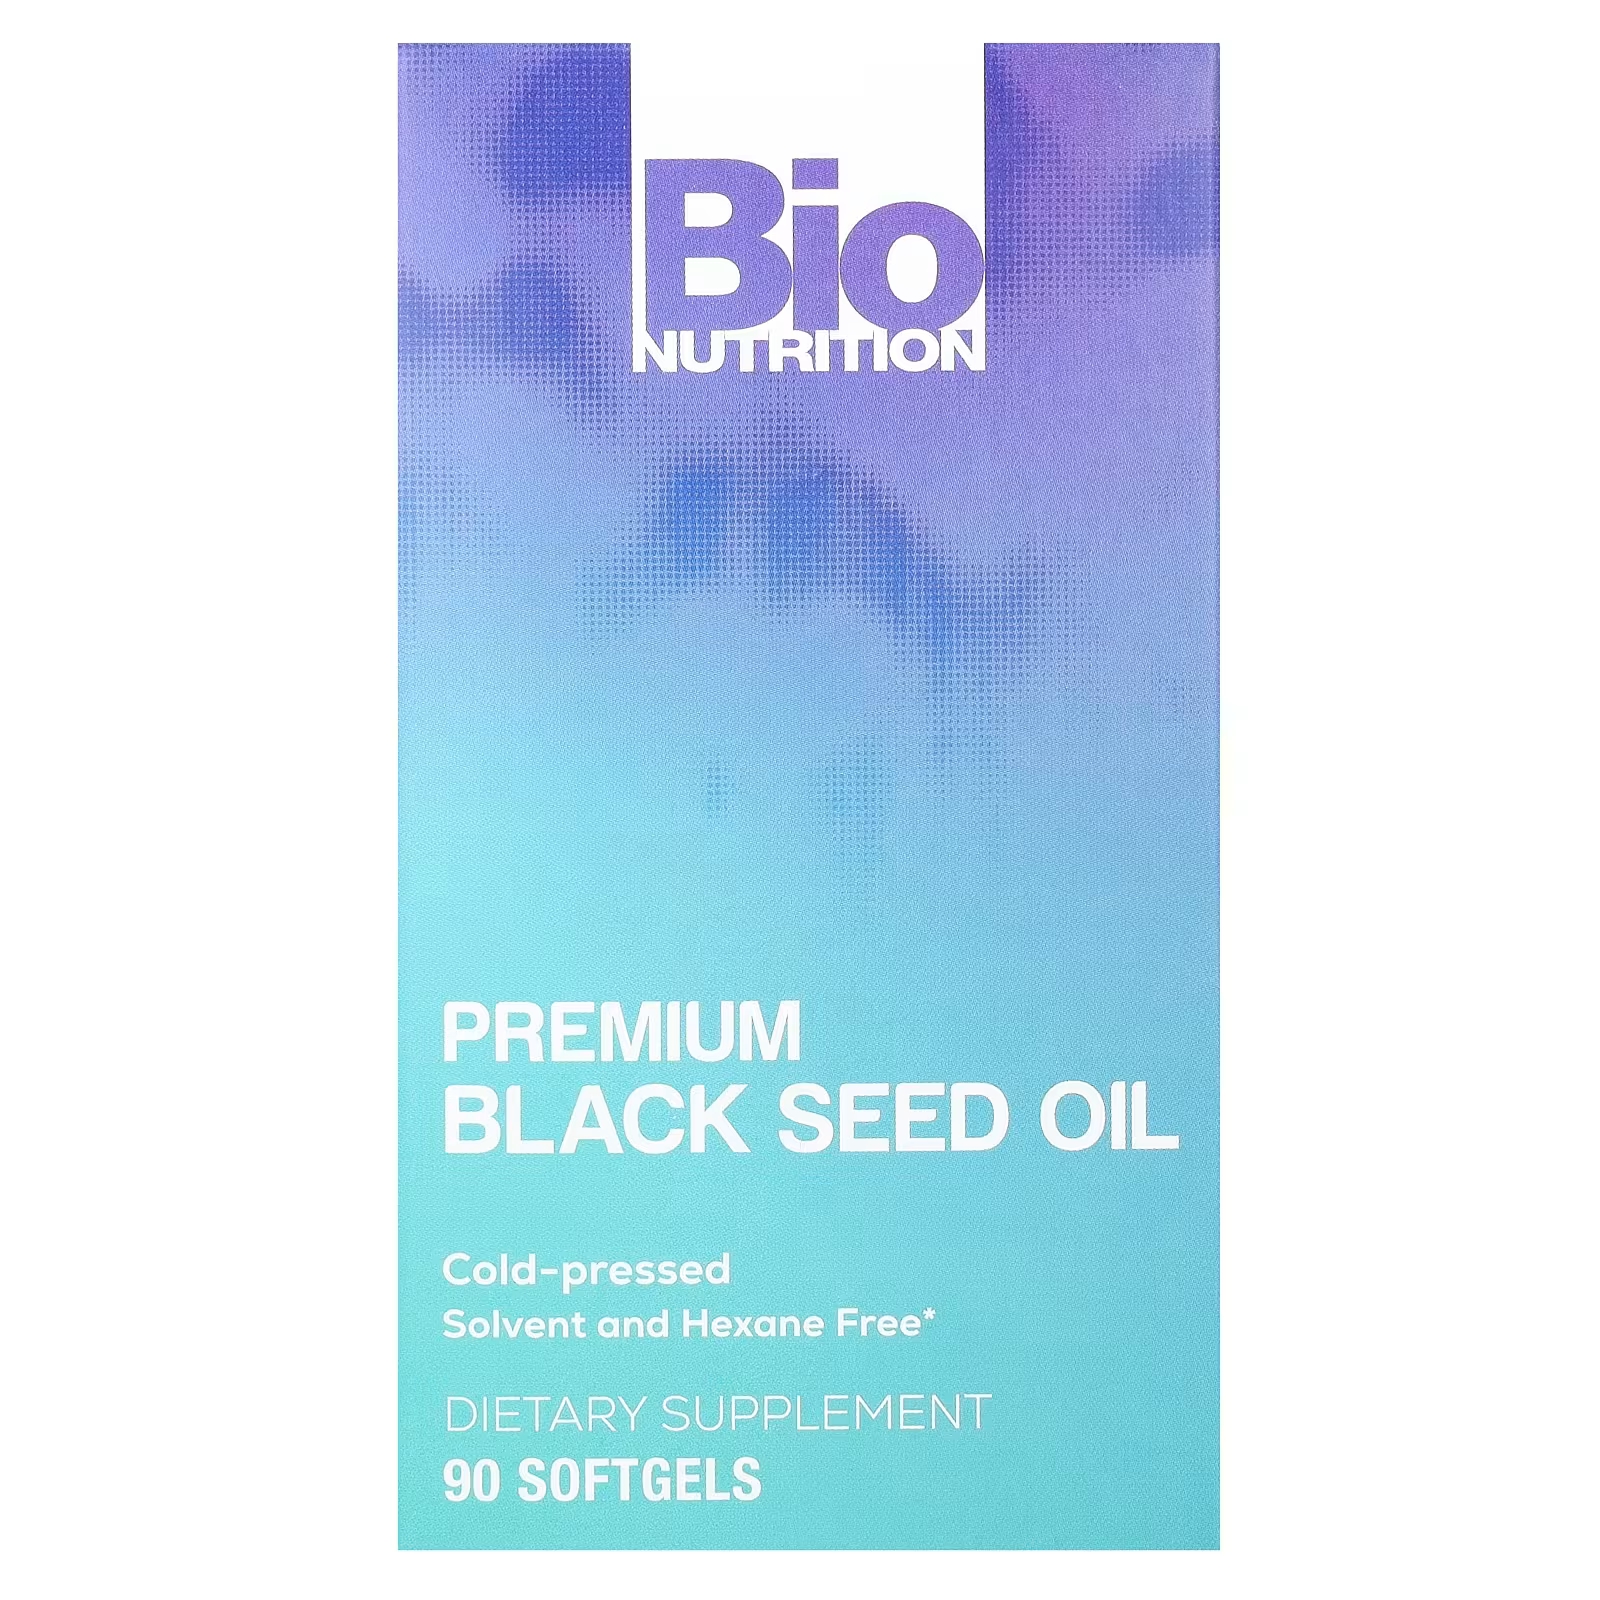 масло sunergetic семян черного тмина премиум класса 500 мг 90 мягких желатиновых капсул Масло черного тмина Bio Nutrition премиум-класса, 90 мягких таблеток